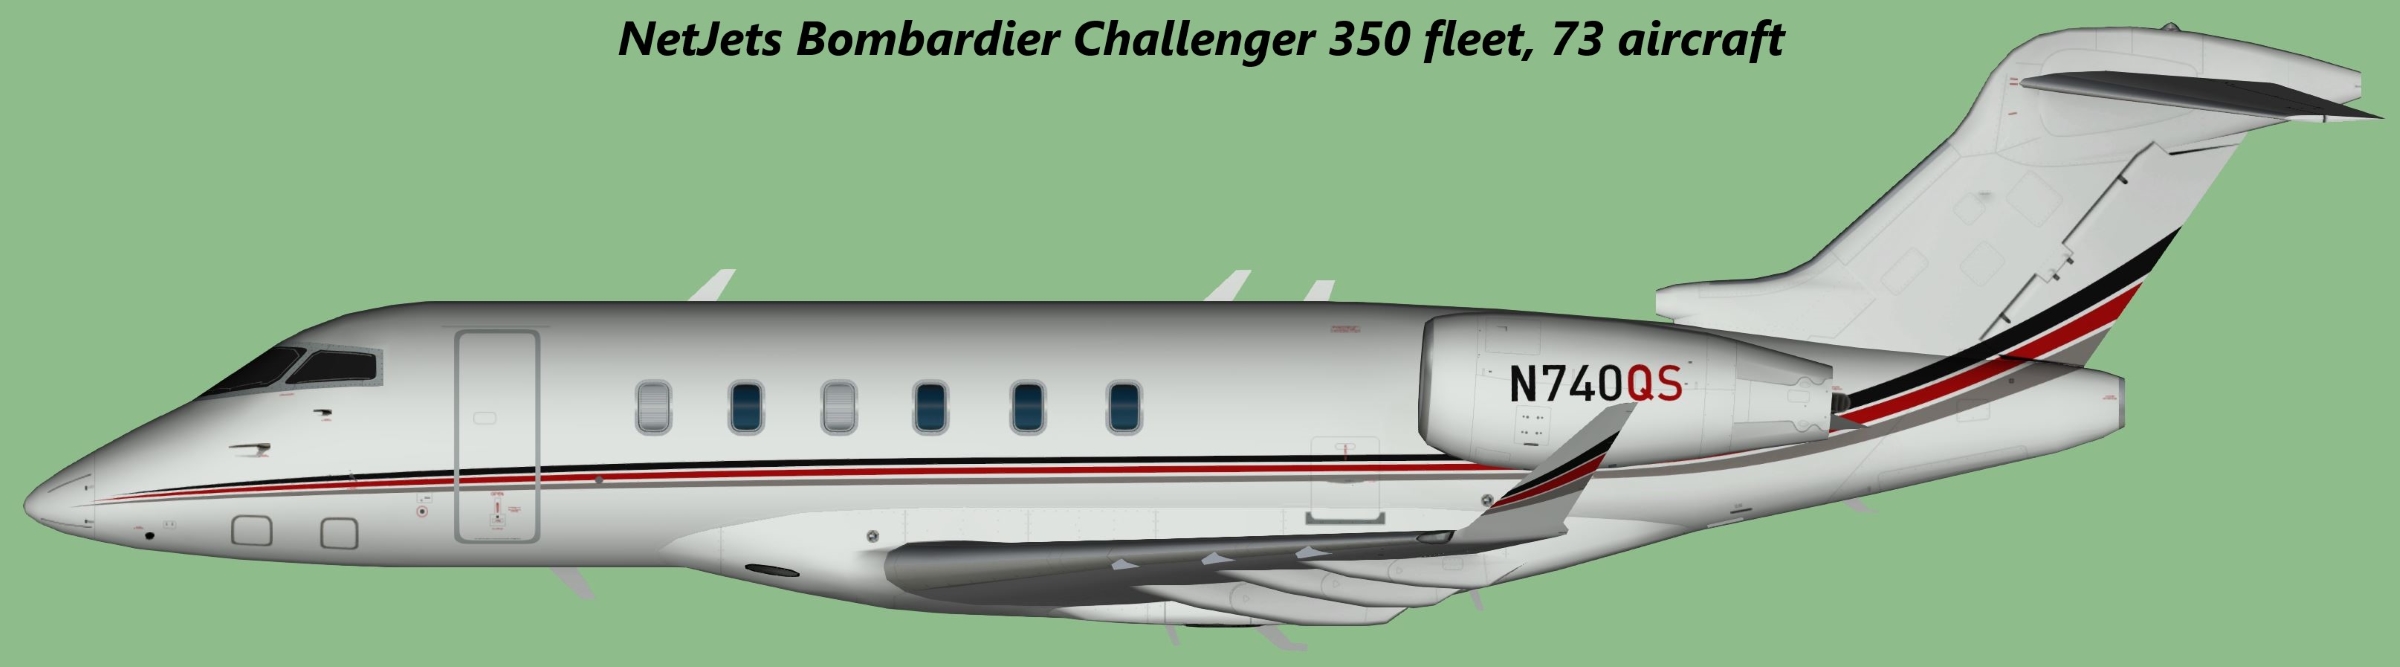 NetJets Bombardier Challenger 350 fleet